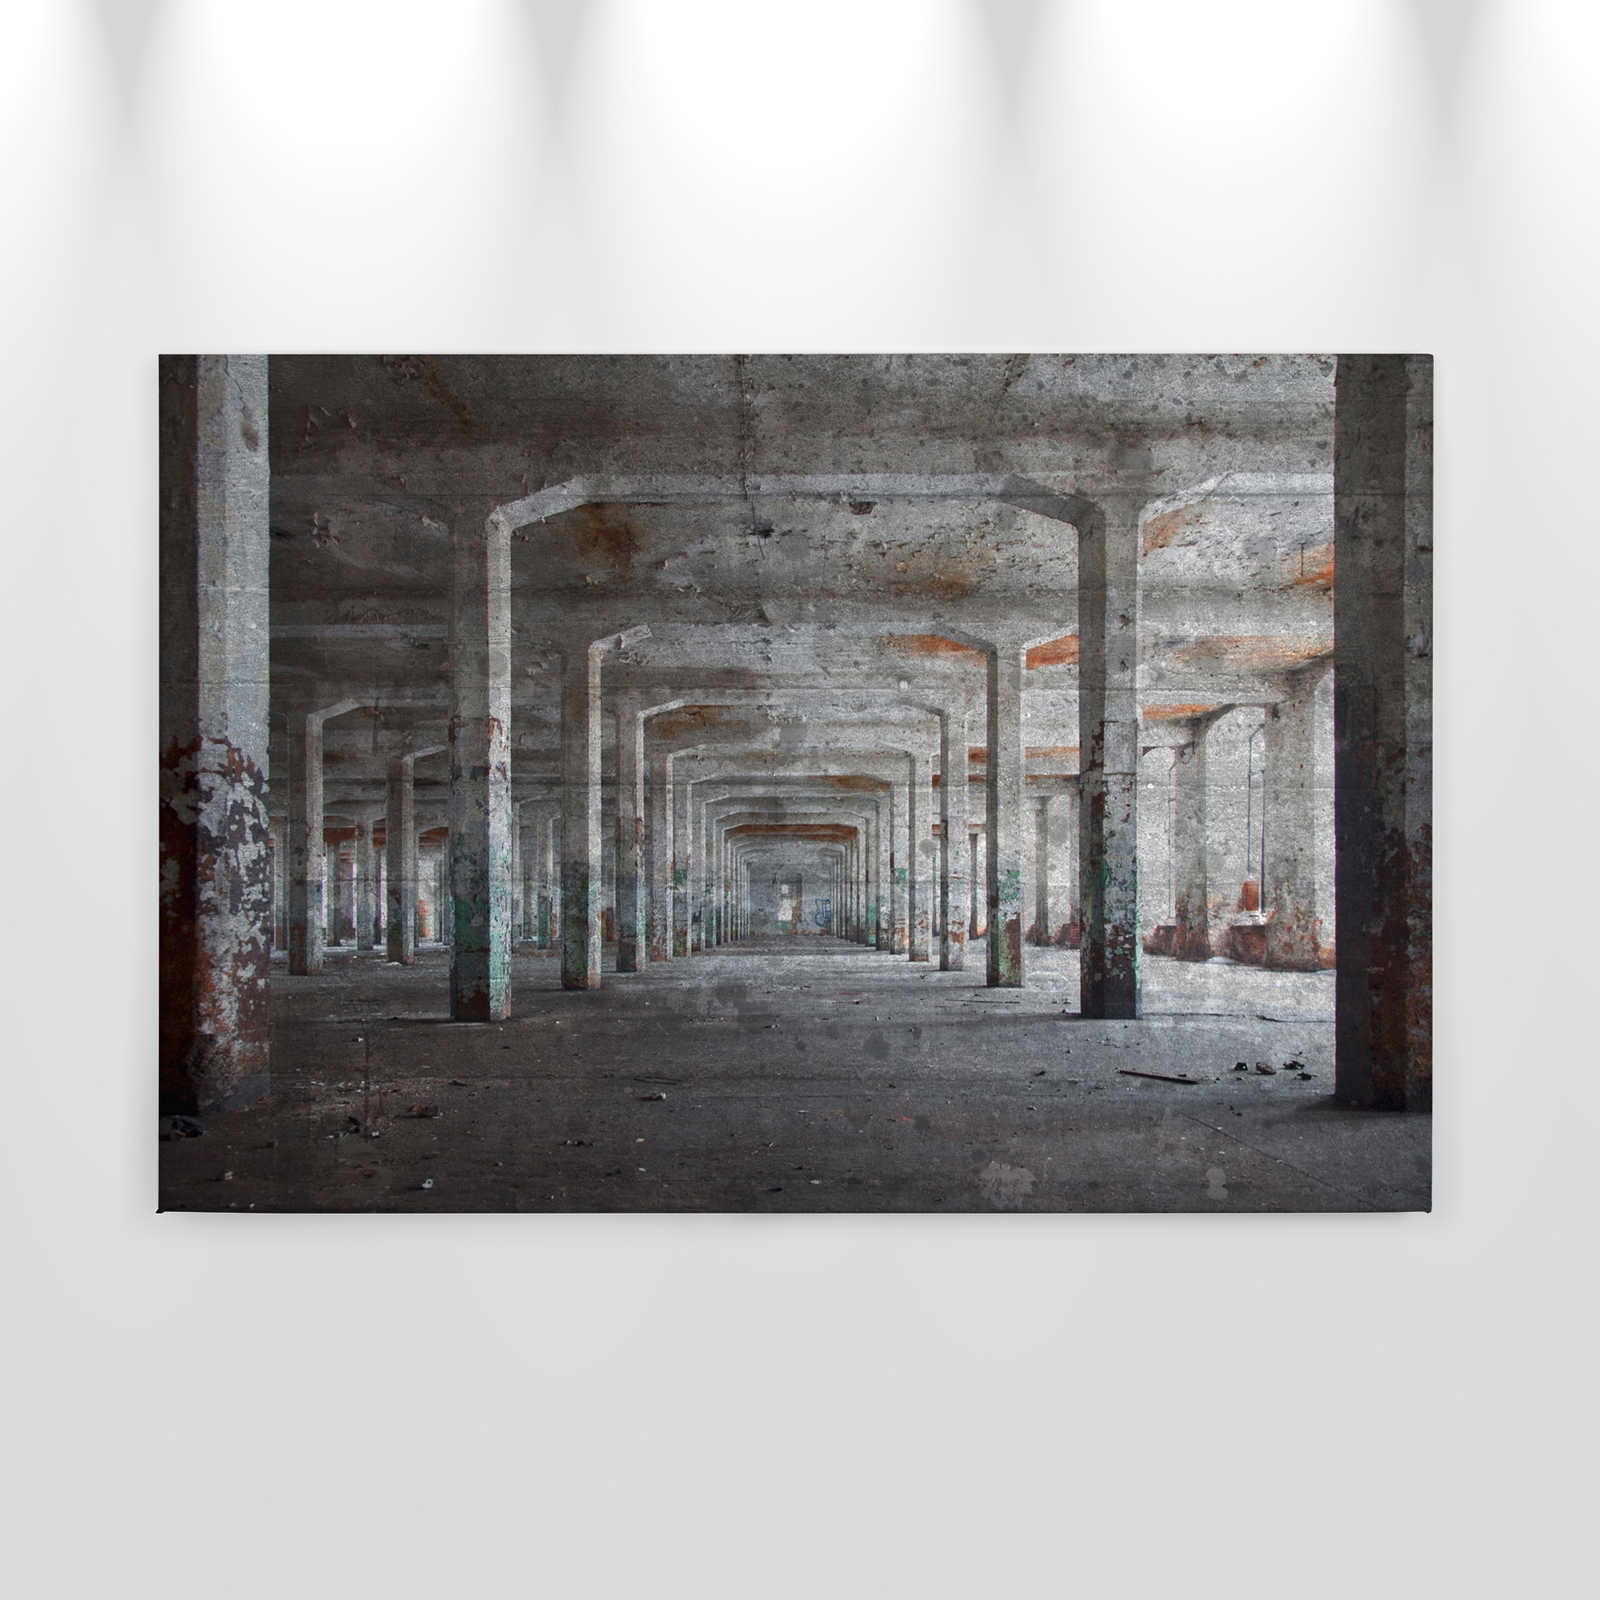             Canvas with old concrete building with 3D optics - 0.90 m x 0.60 m
        